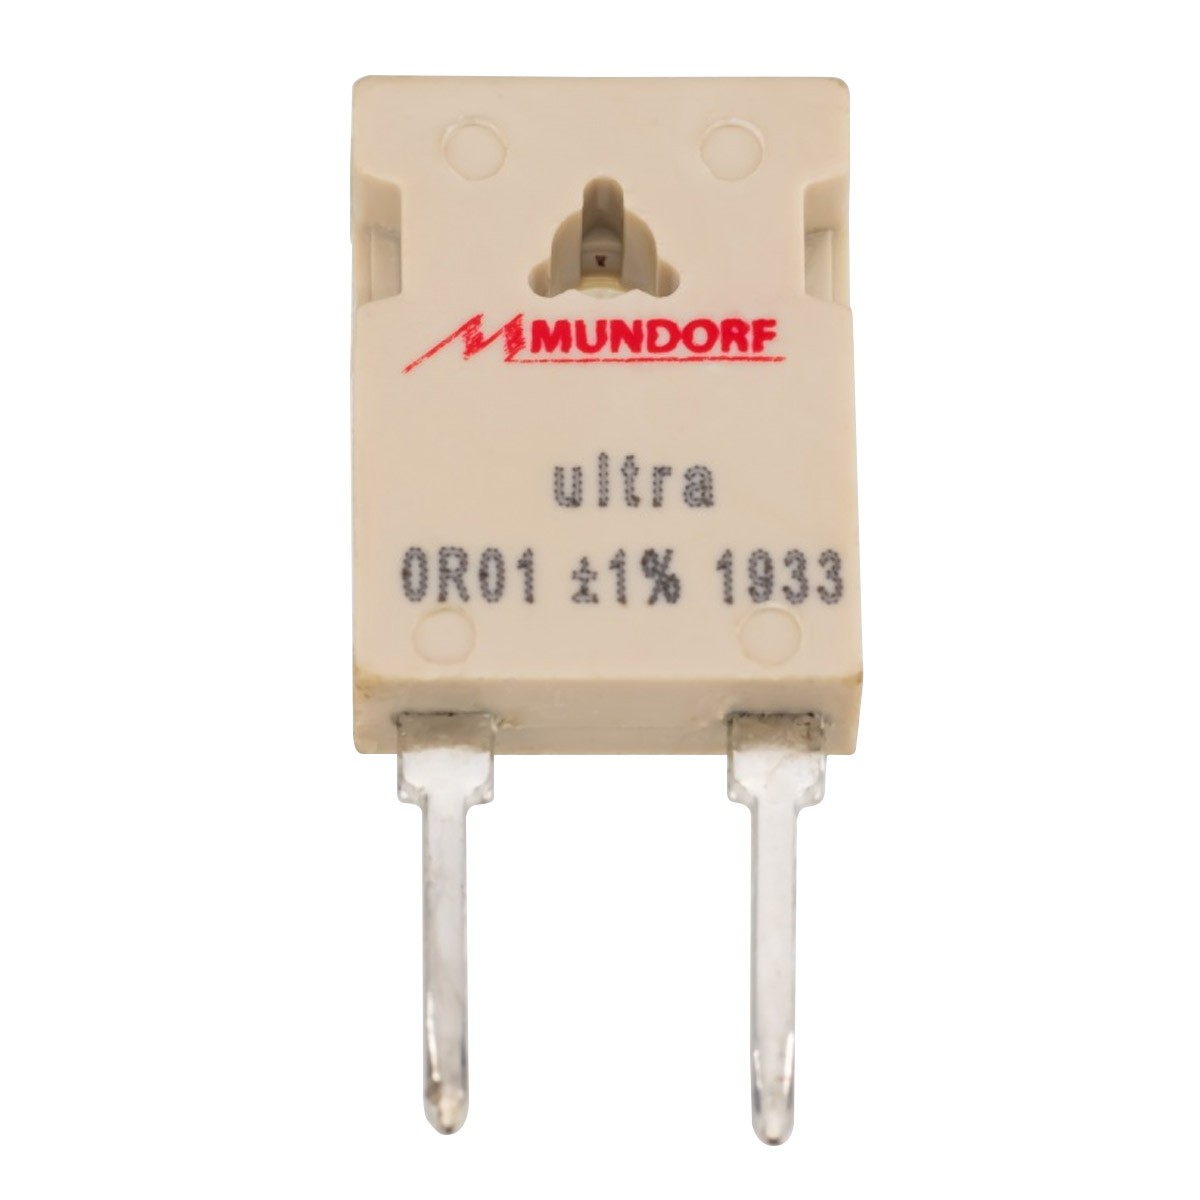 MUNDORF MRESIST ULTRA Resistor 30W 27 Ohm